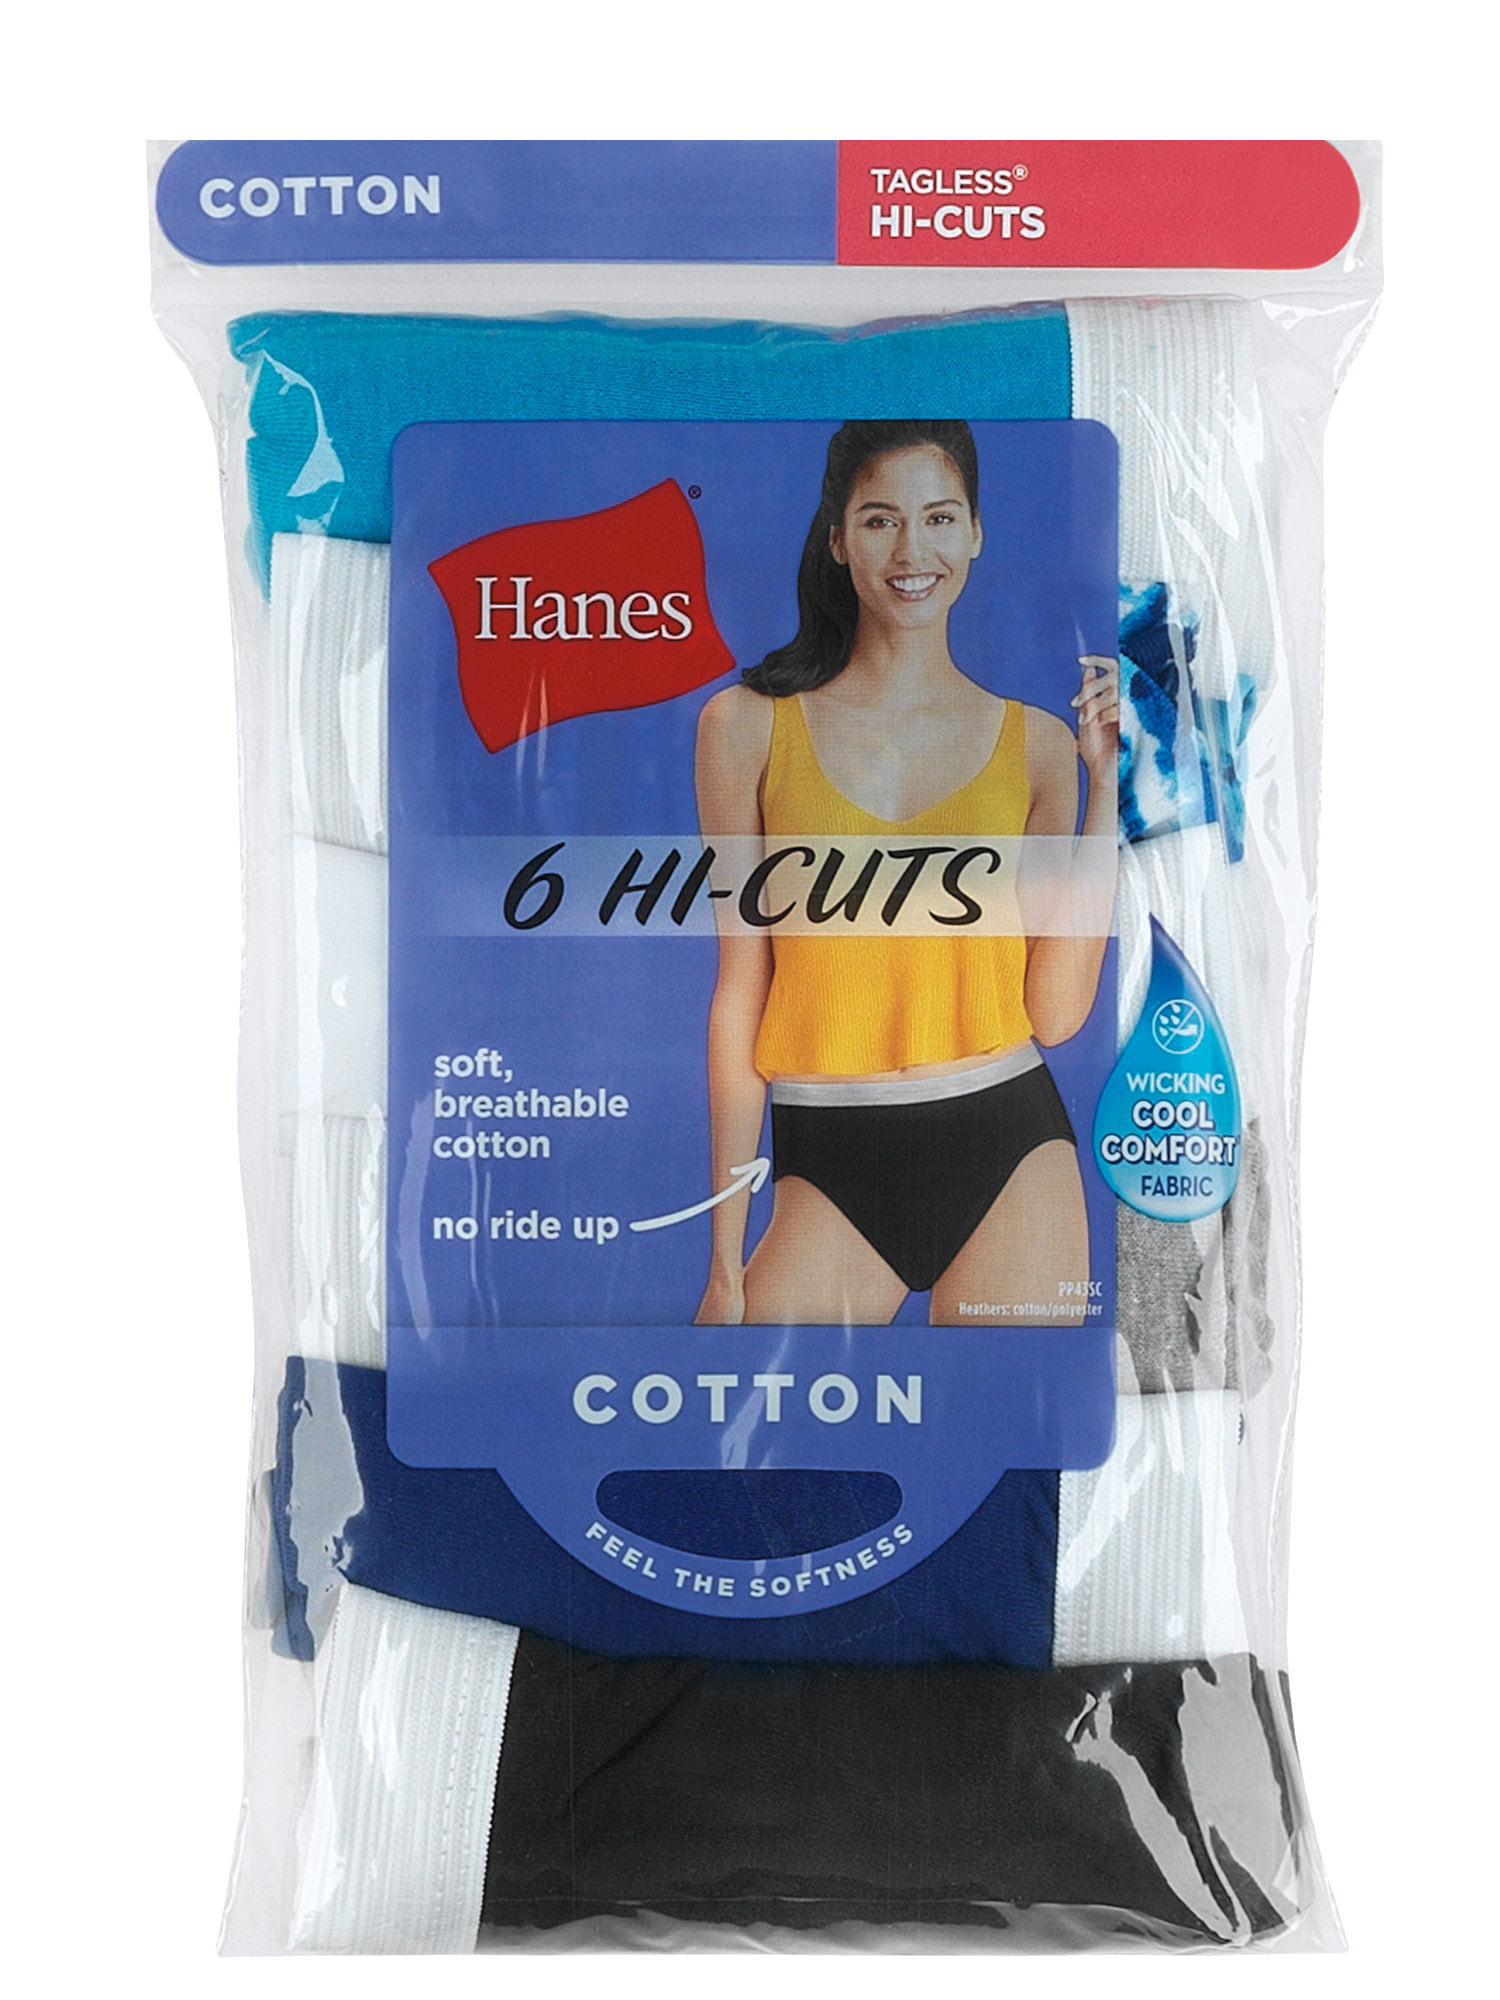 Hanes Nylon High Cut Panties Set - Pack of 6 for sale online